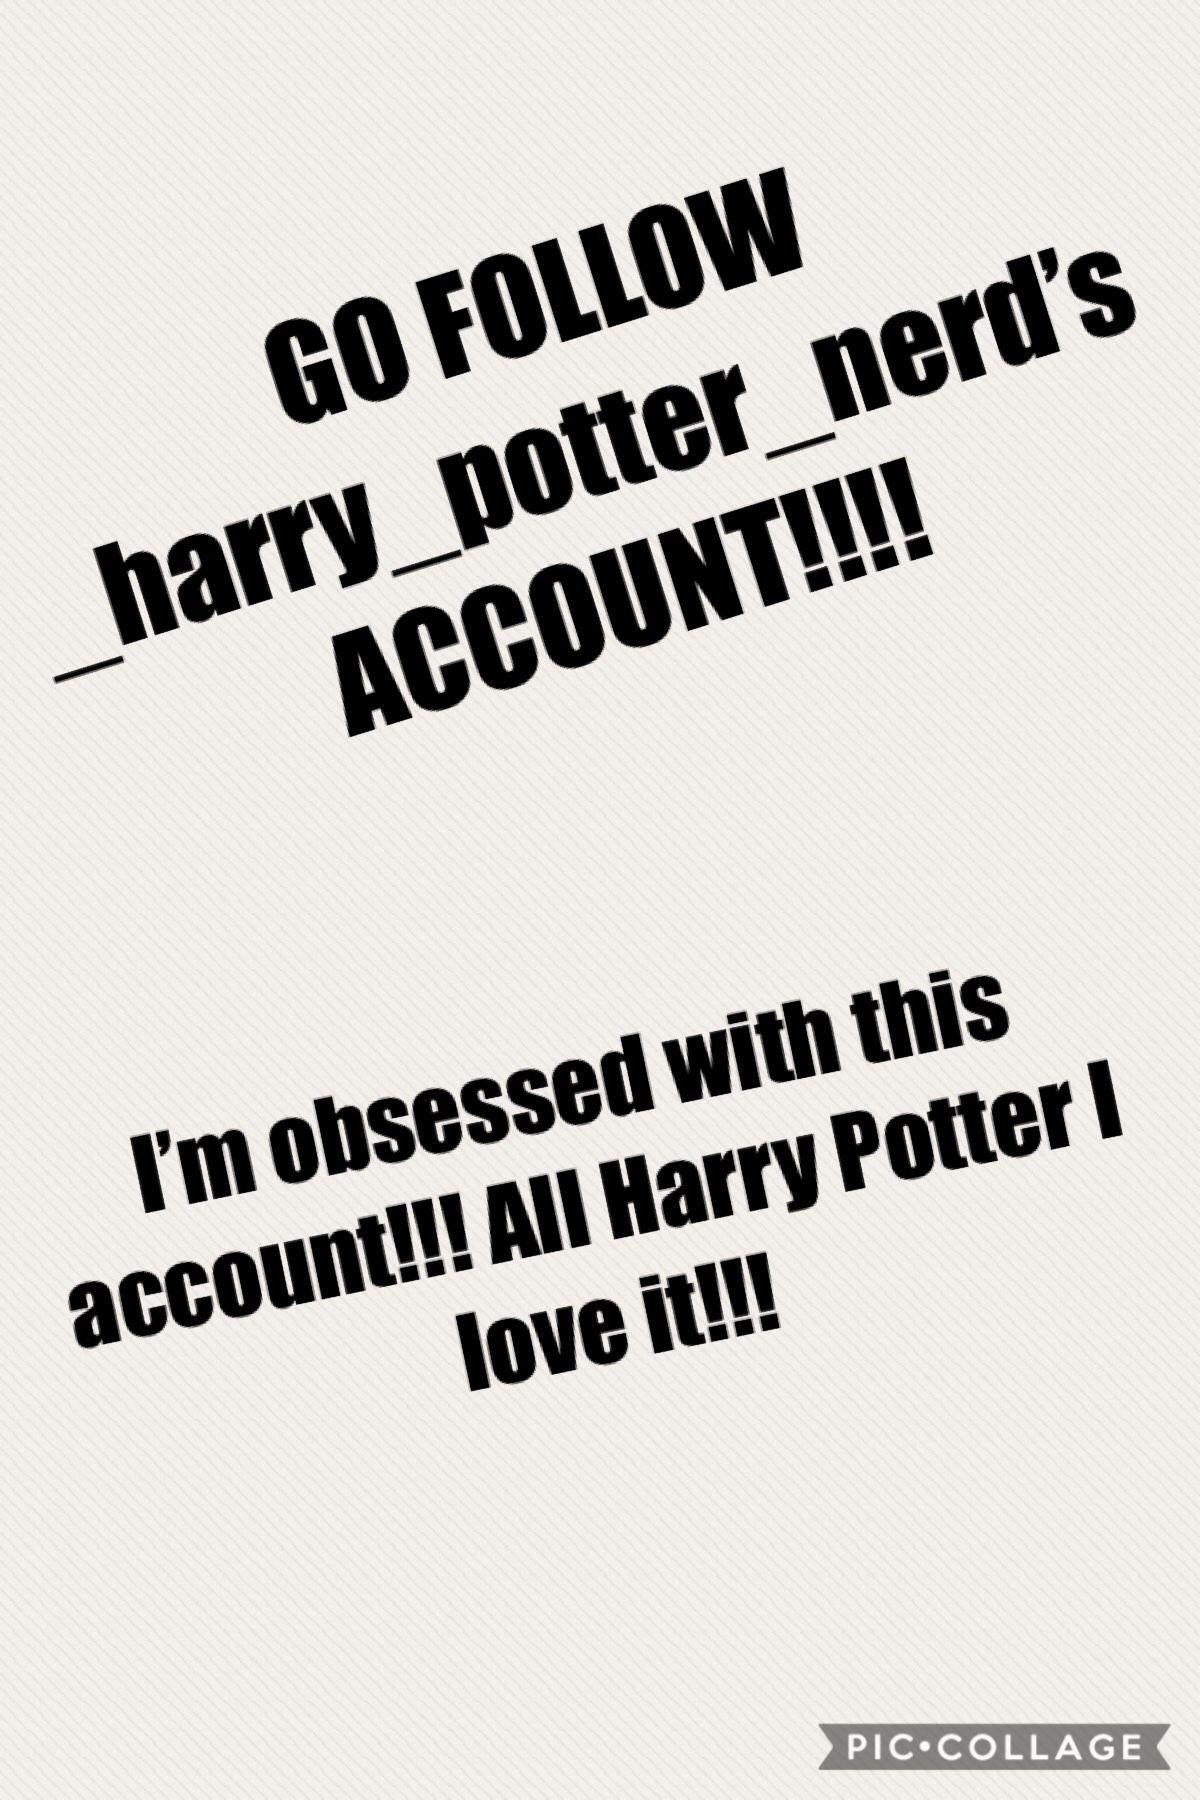 Go follow _harry_potter_nerd’s account 